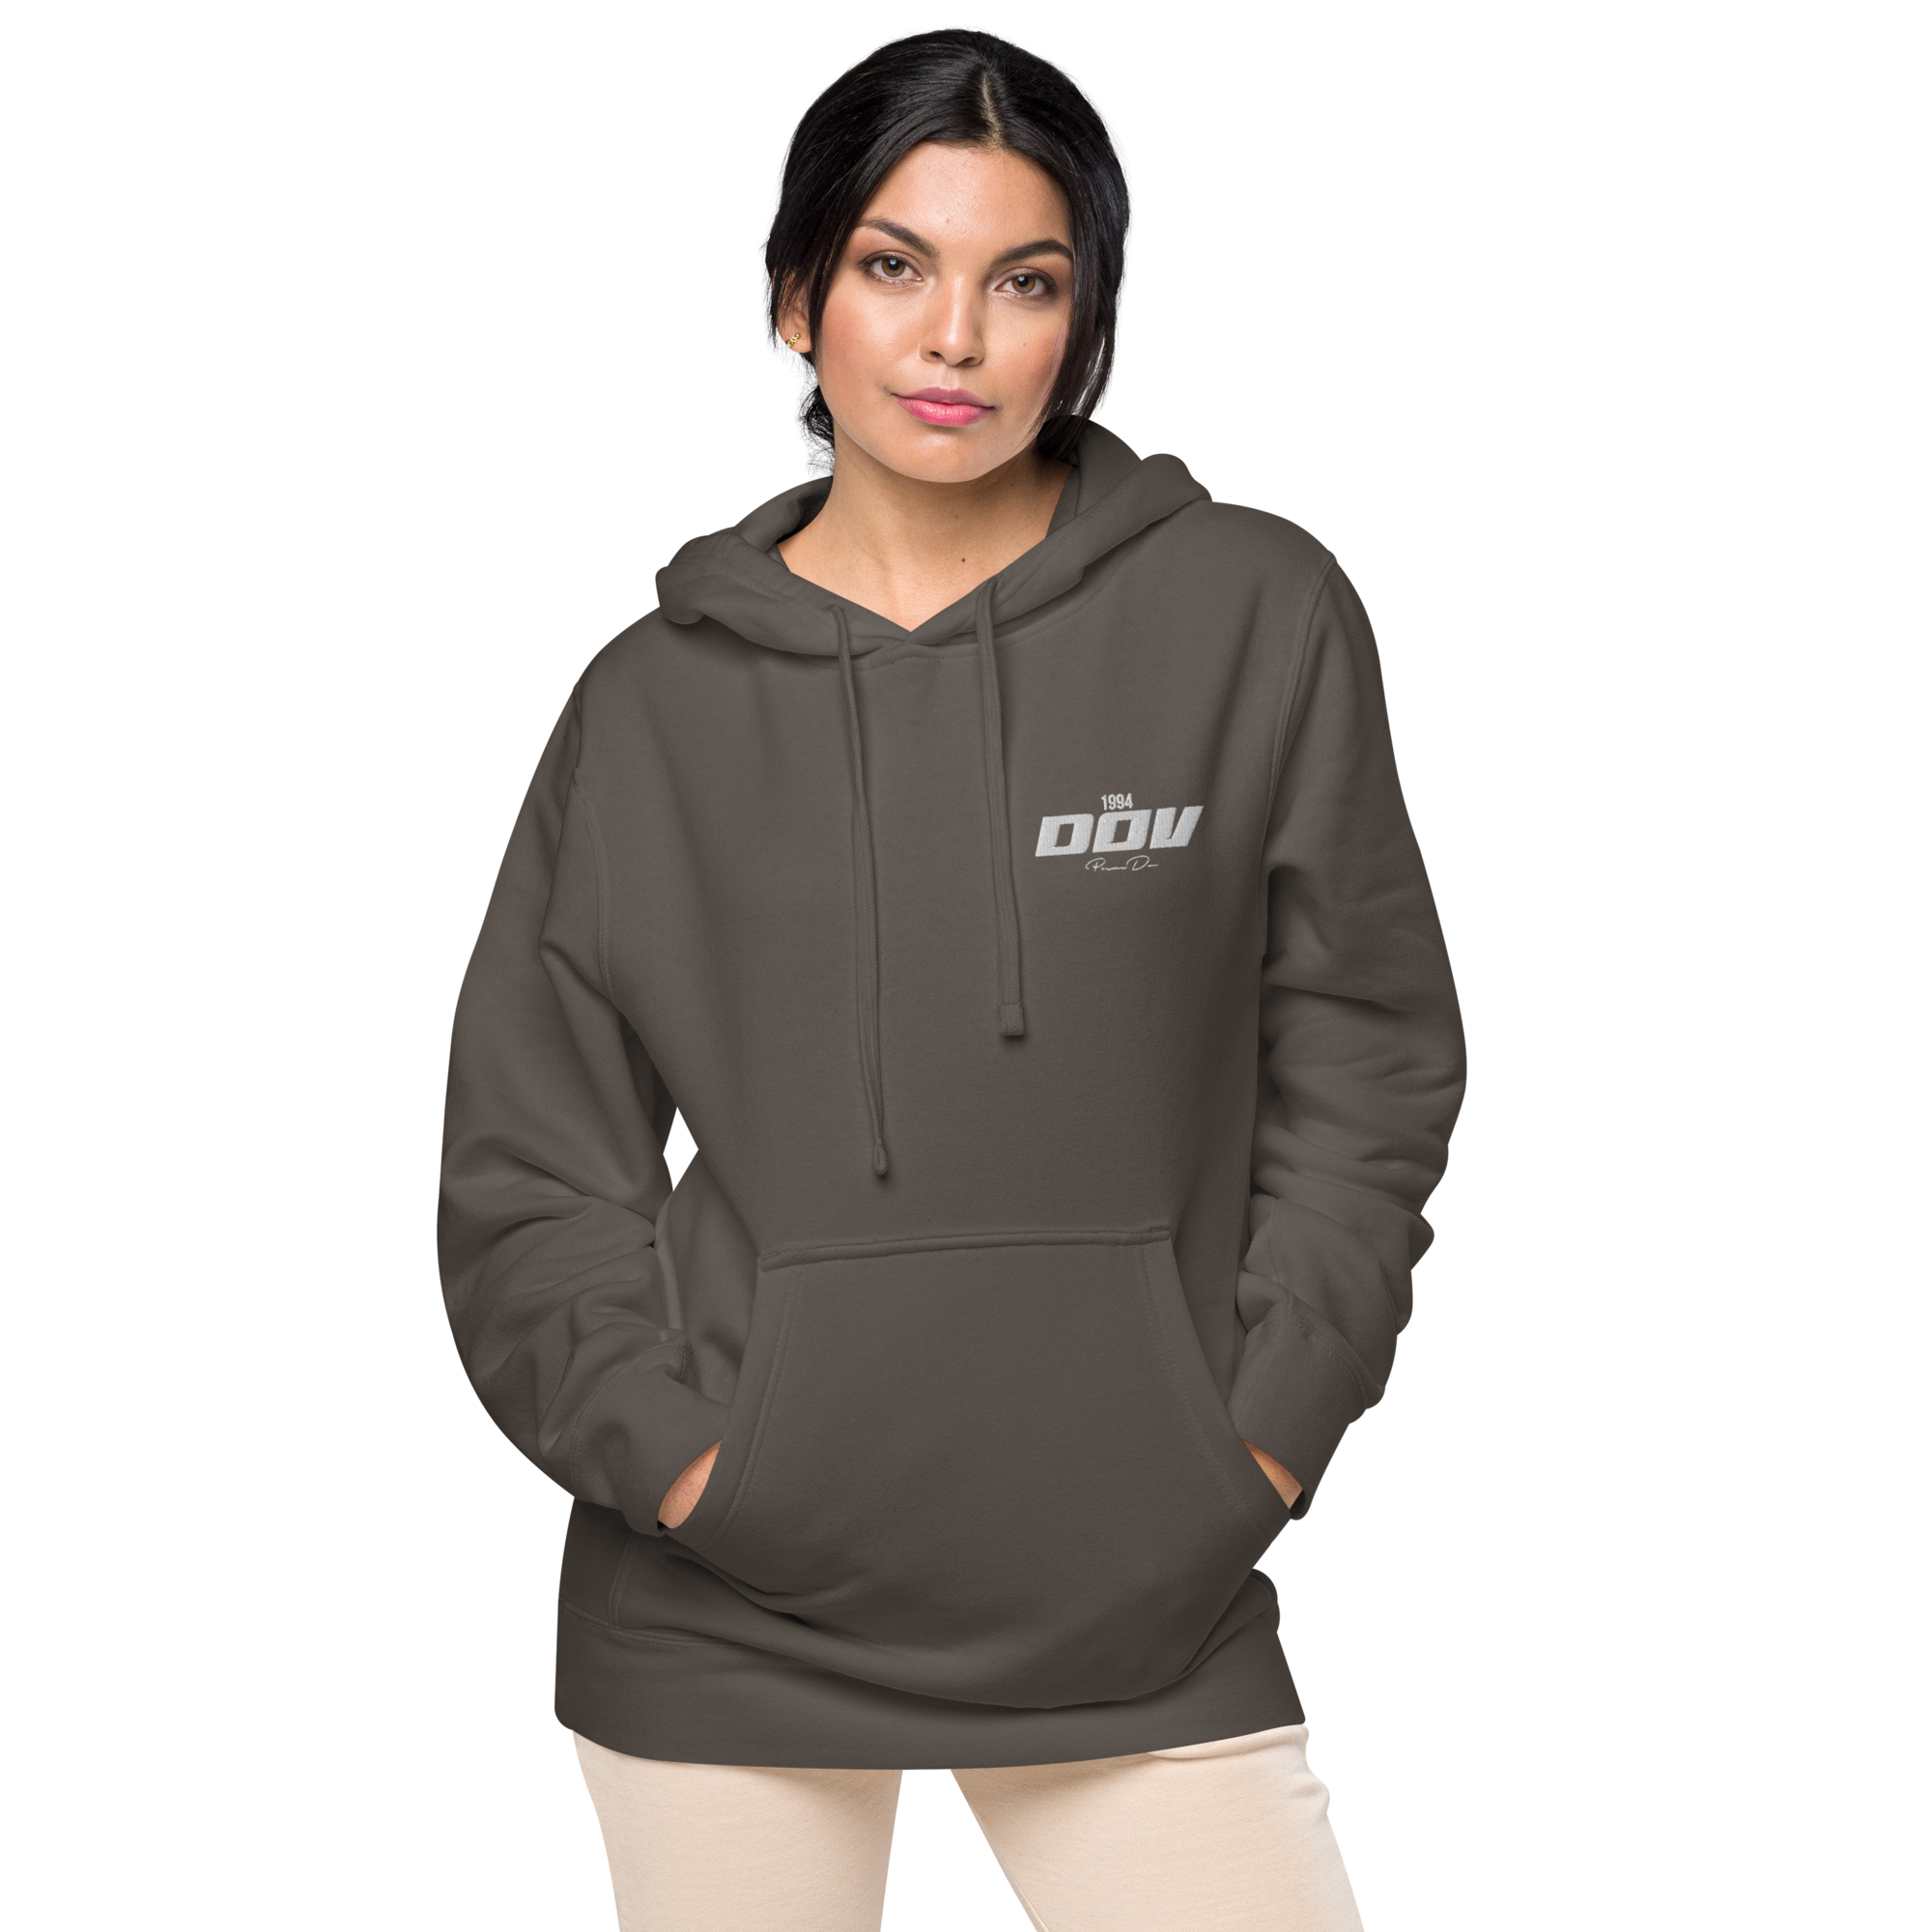 Unisex Dov hoodie